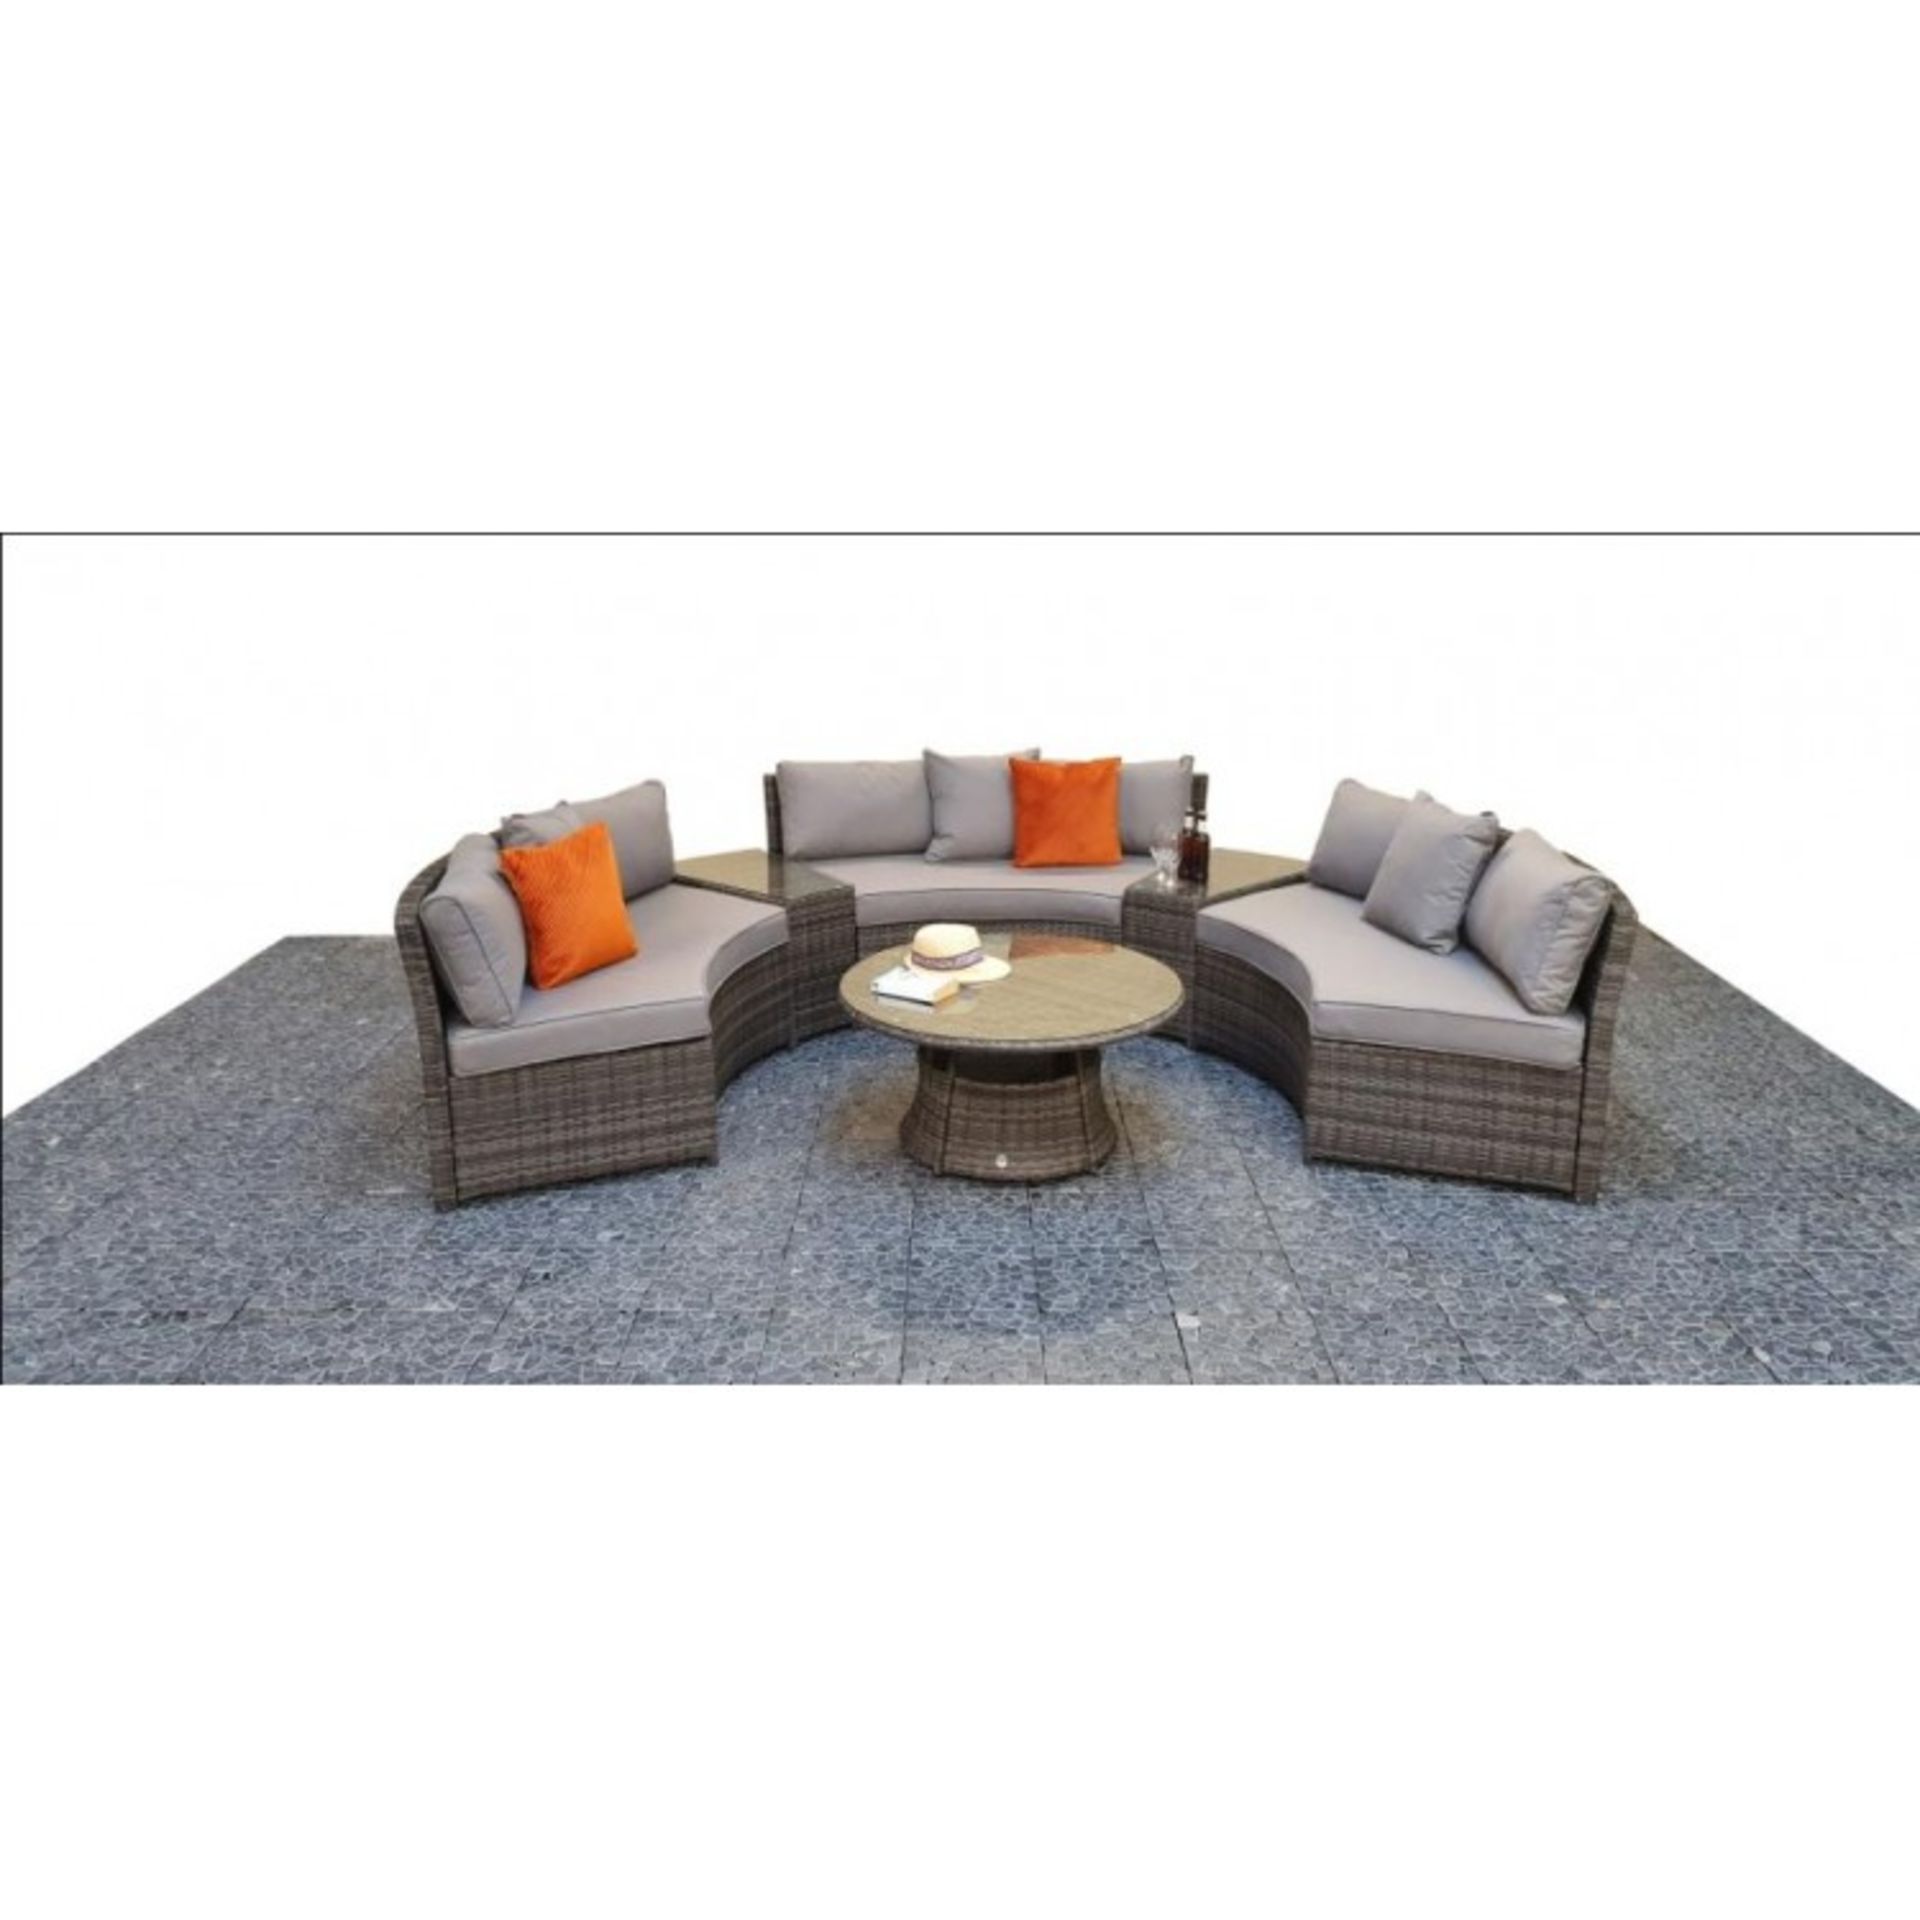 New & Boxed Luxury Signature Weave Garden Furniture - Juliet Grey Half Moon Sofa Set. RRP £2,999. - Image 2 of 6